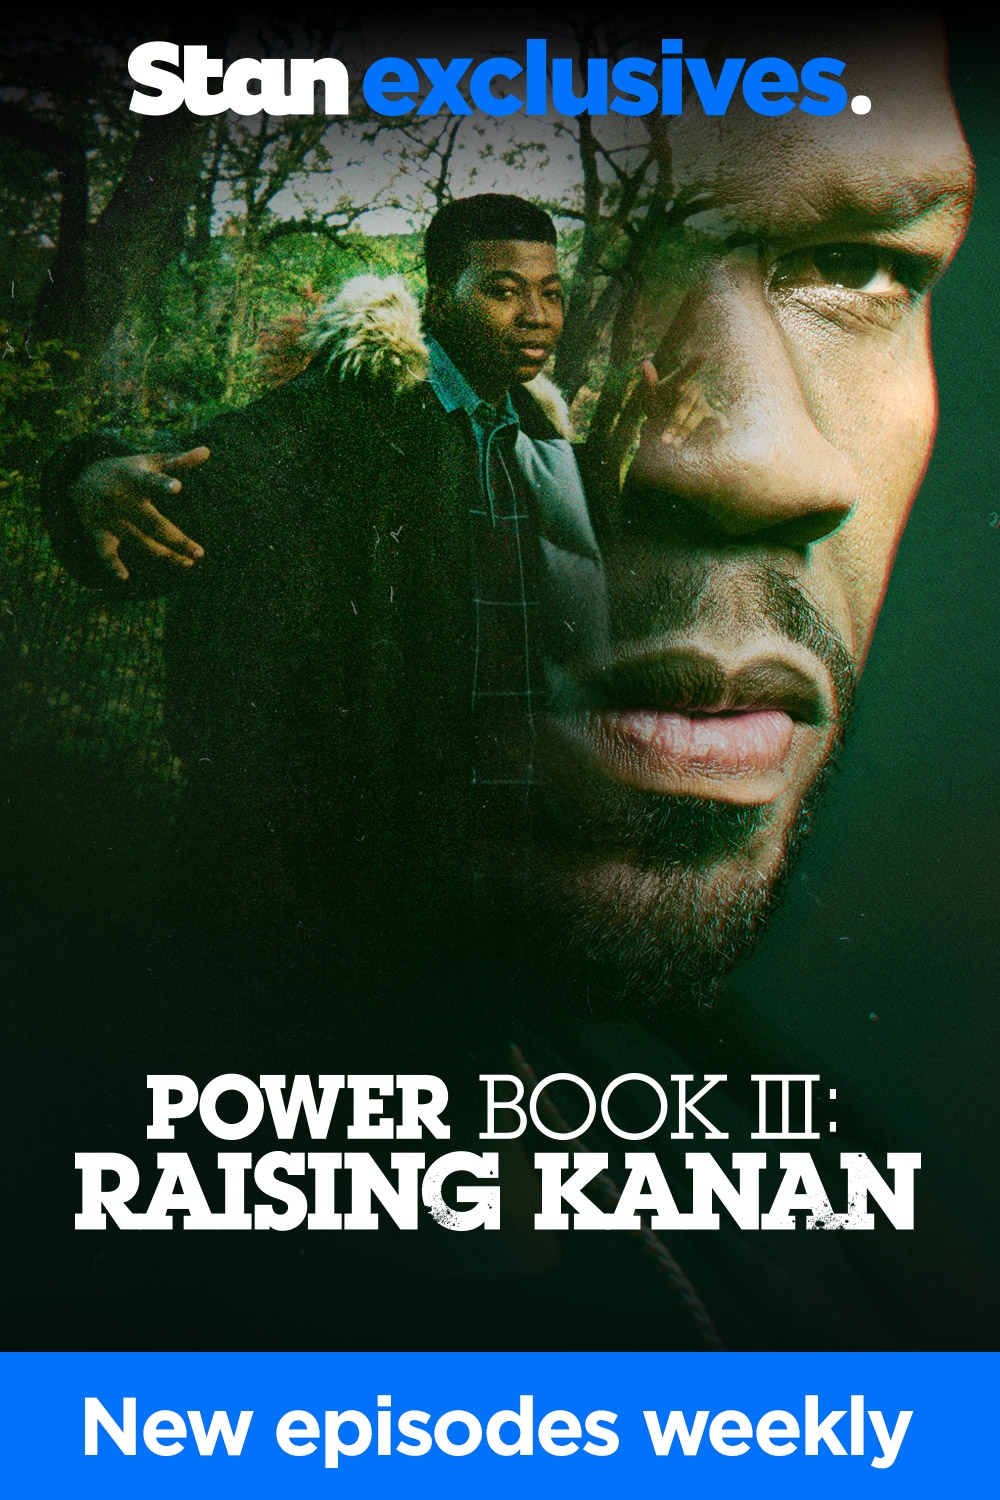 Watch Power Book III: Raising Kanan | Now Streaming | Stan.